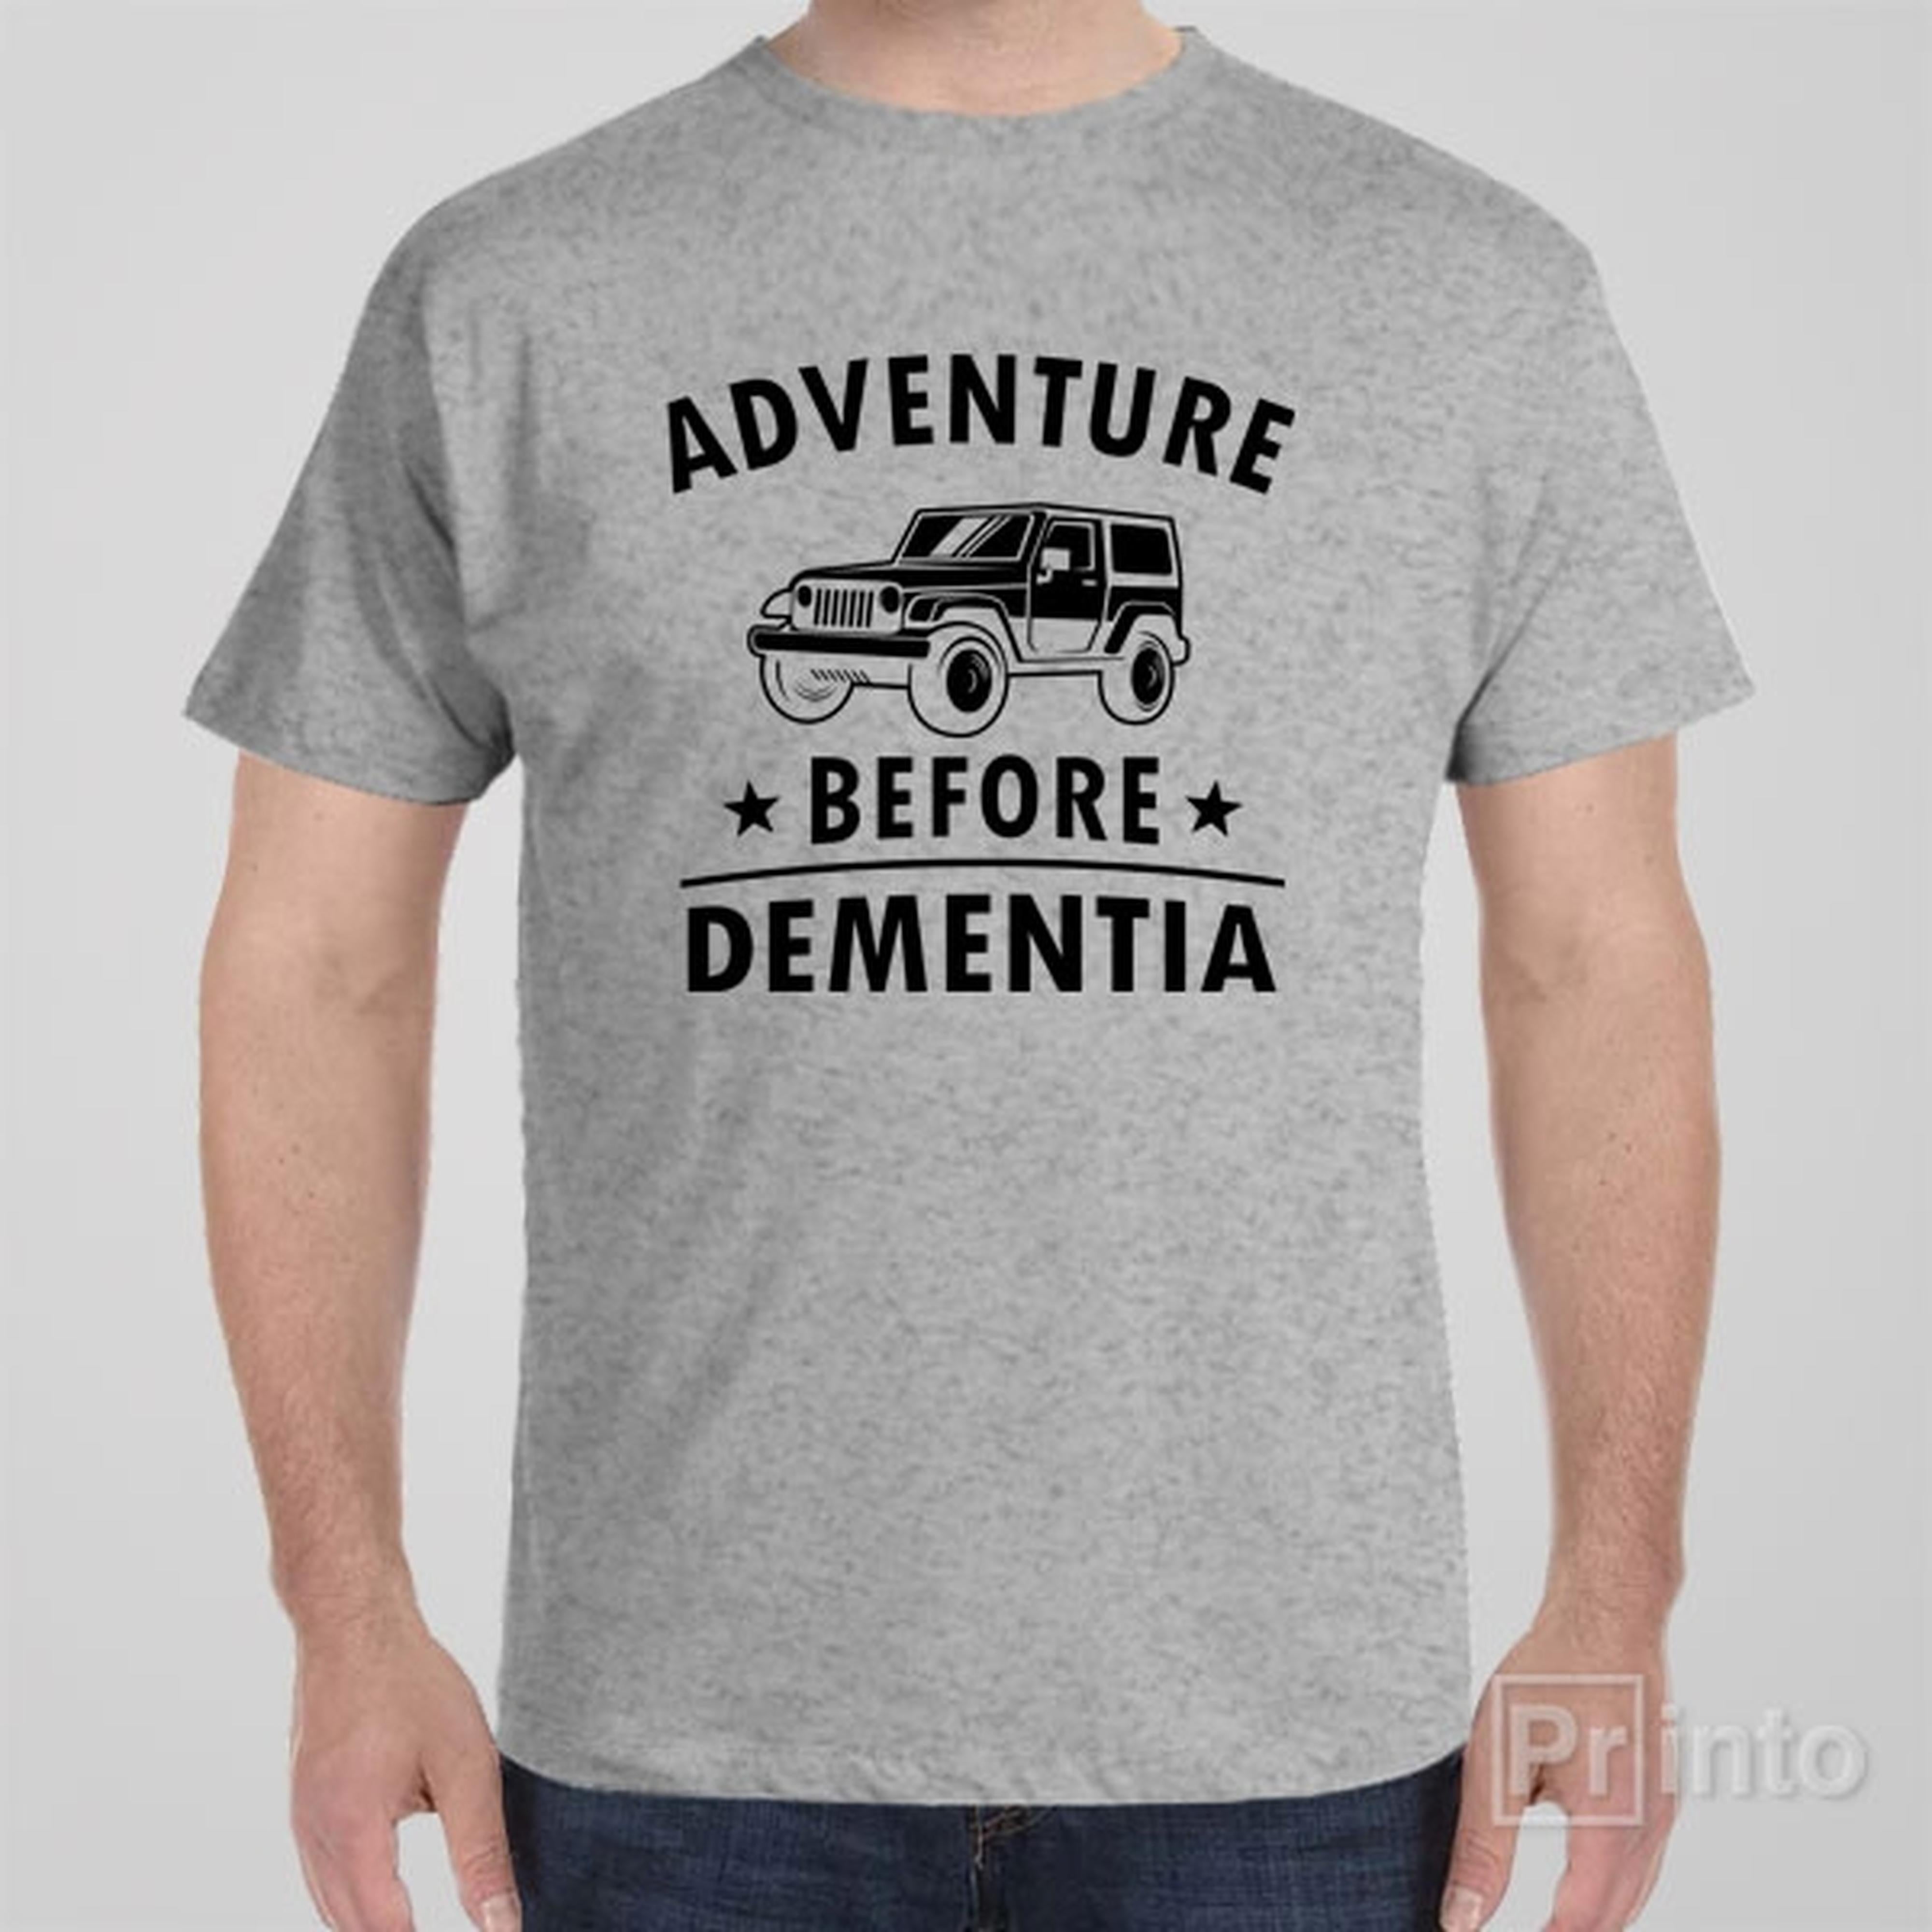 adventure-before-dementia-4wd-t-shirt